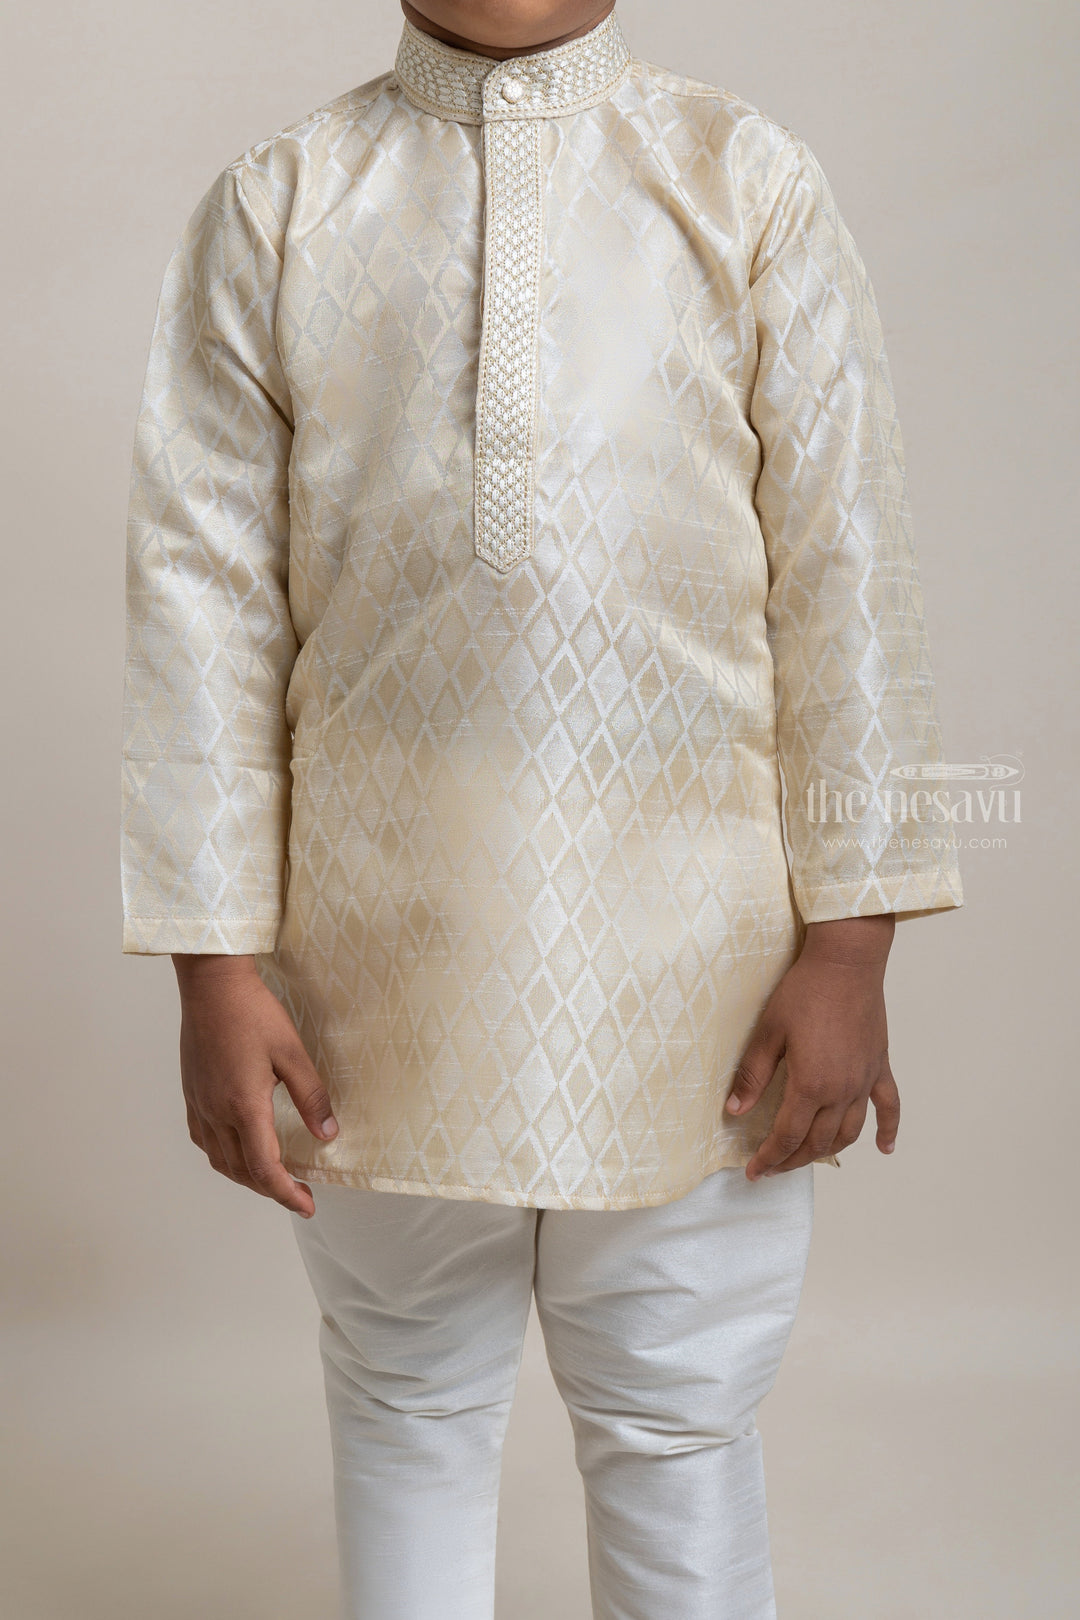 The Nesavu Boys Kurtha Set Printed Beige Kurta With Embellished Collar And White Pant For Boys Nesavu Festive Wear Kurta Collection 2023| Fresh Collection| The Nesavu